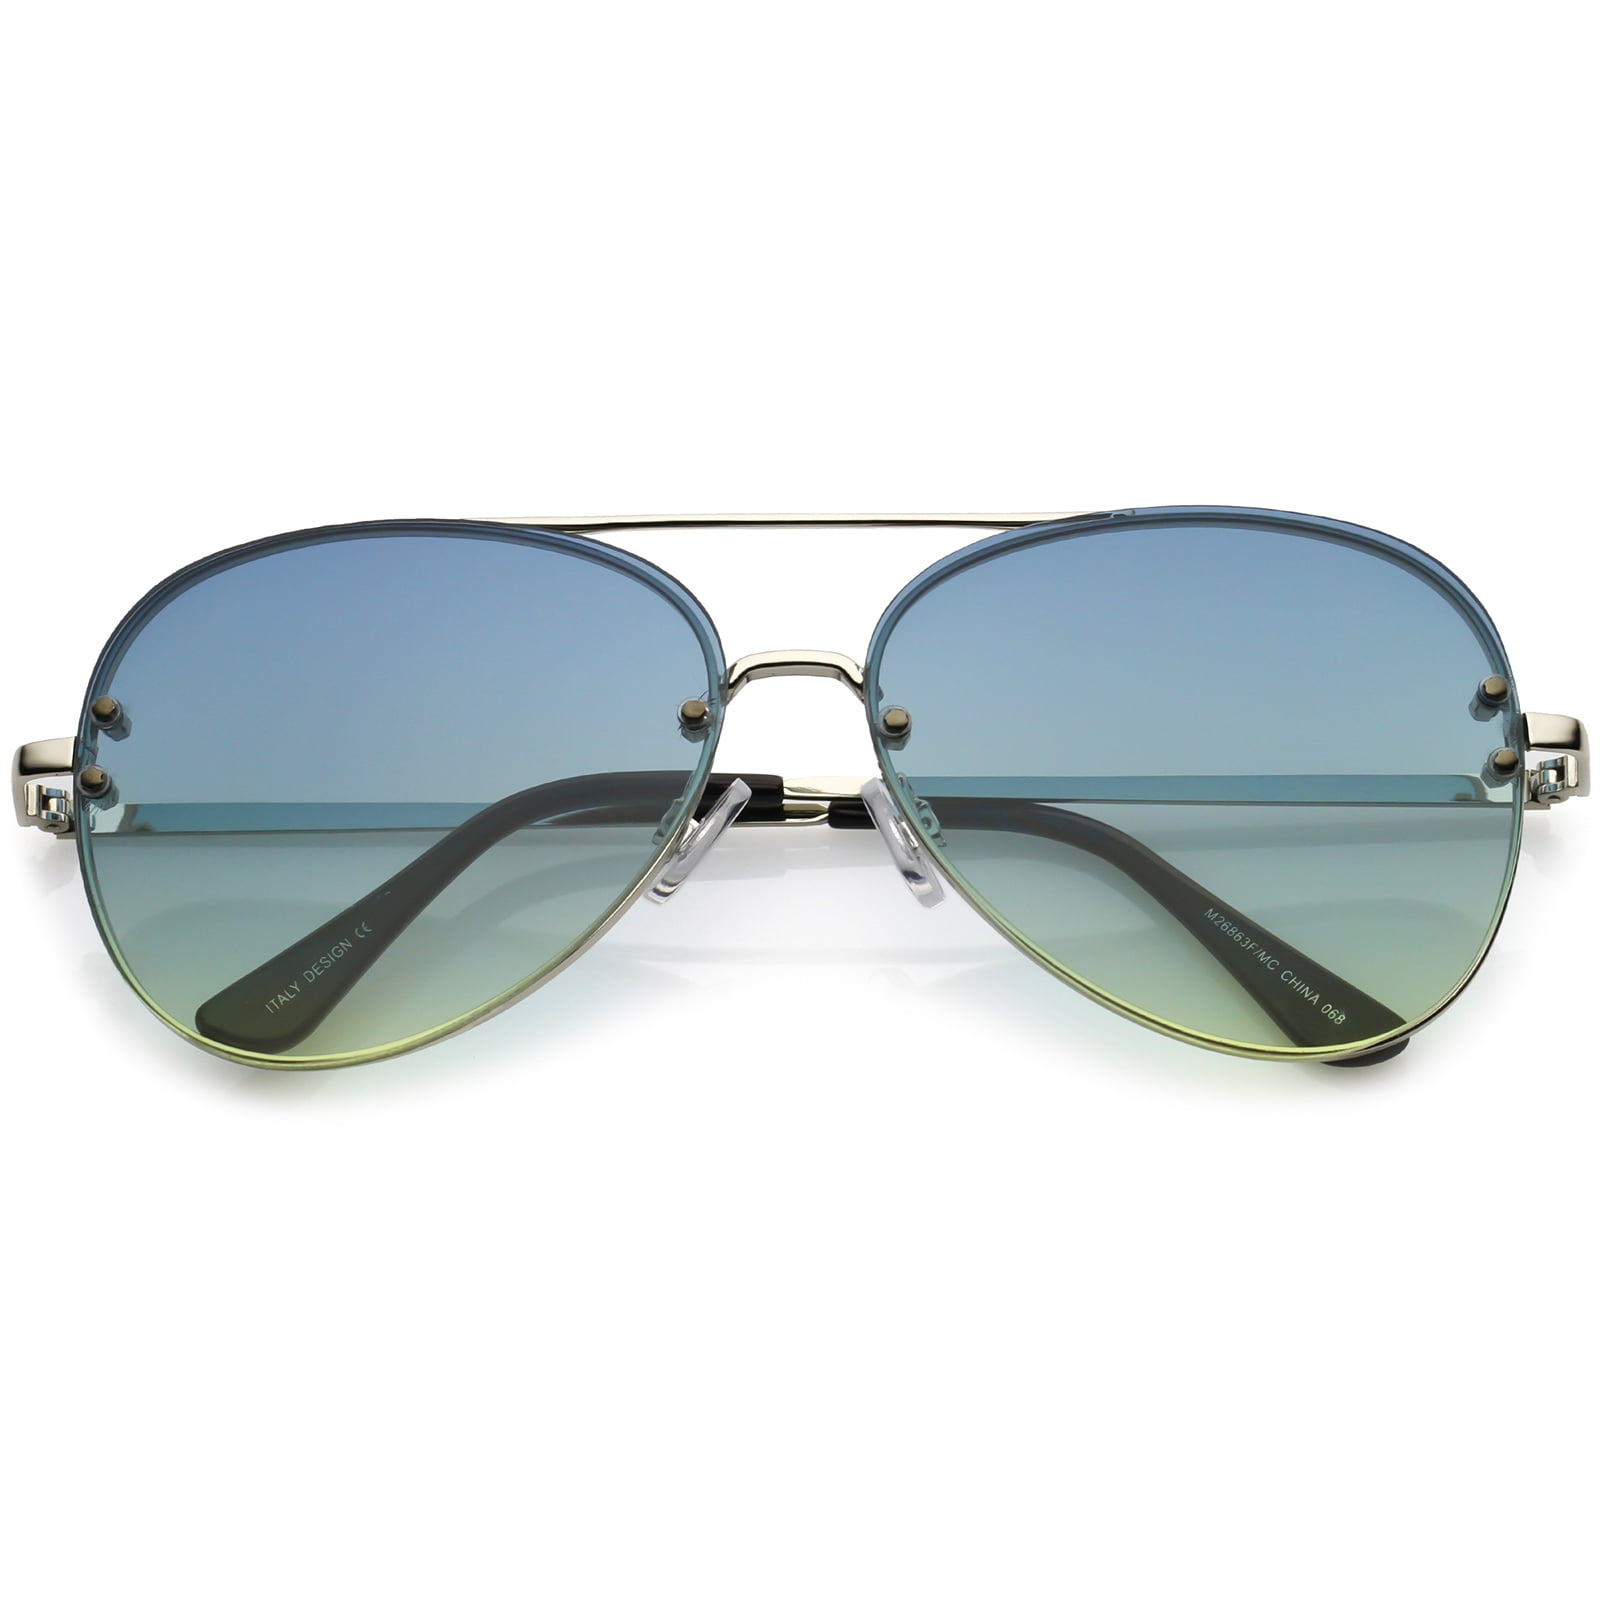 61mm gradient lens aviator sunglasses